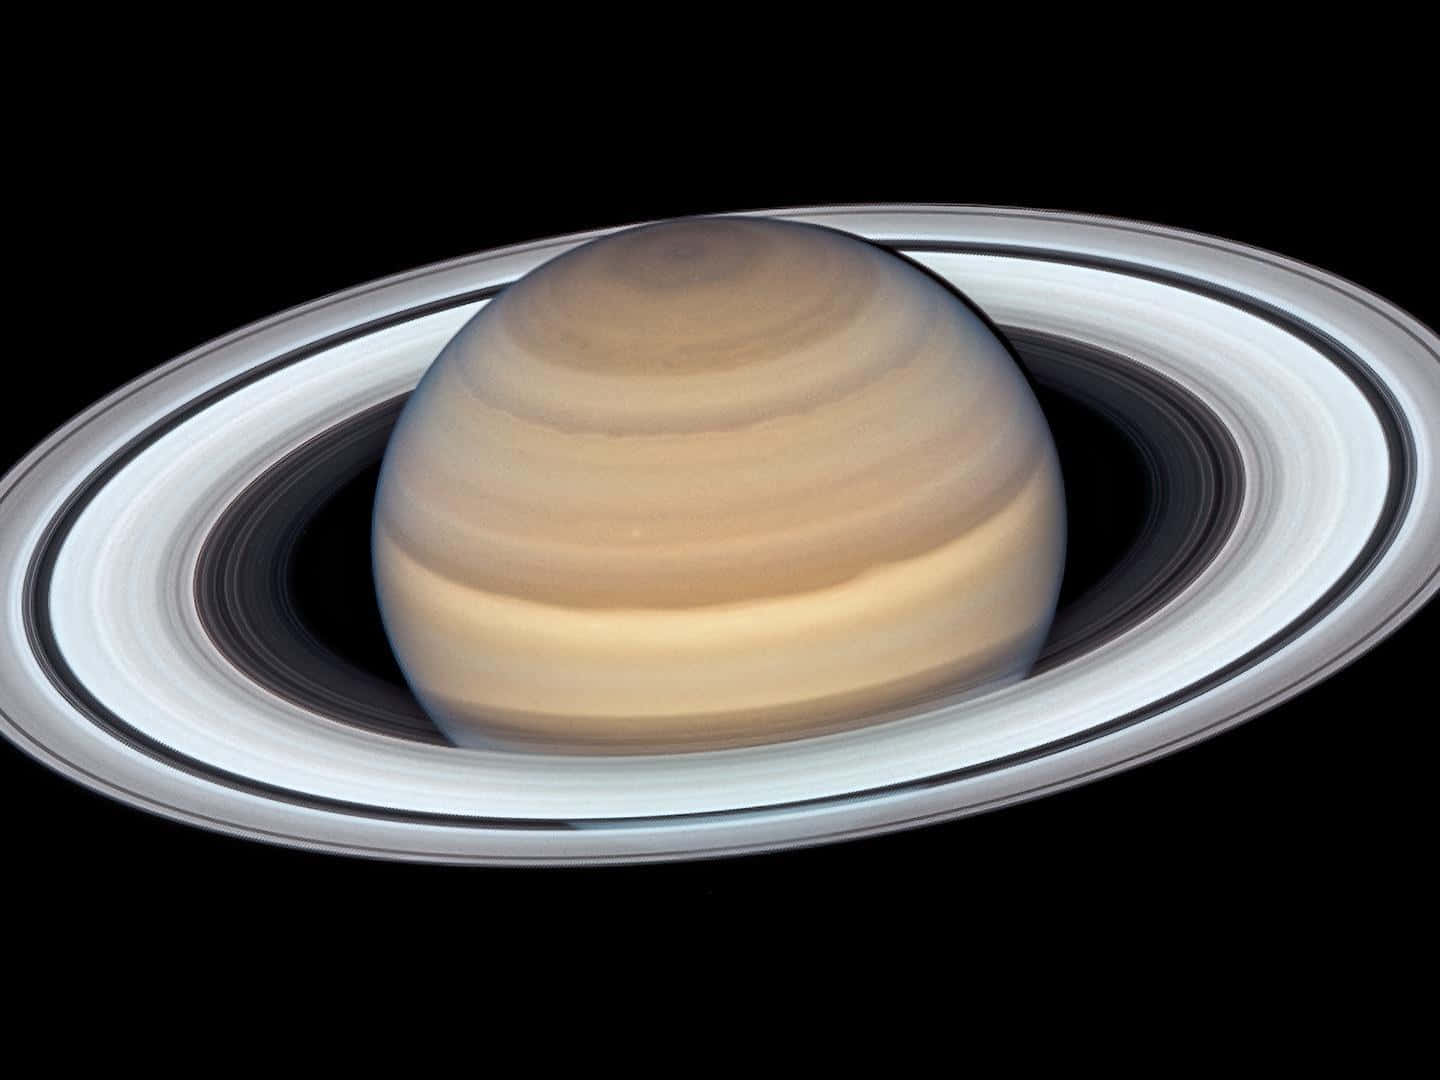 A beautiful, up-close shot of Saturn's majestic rings